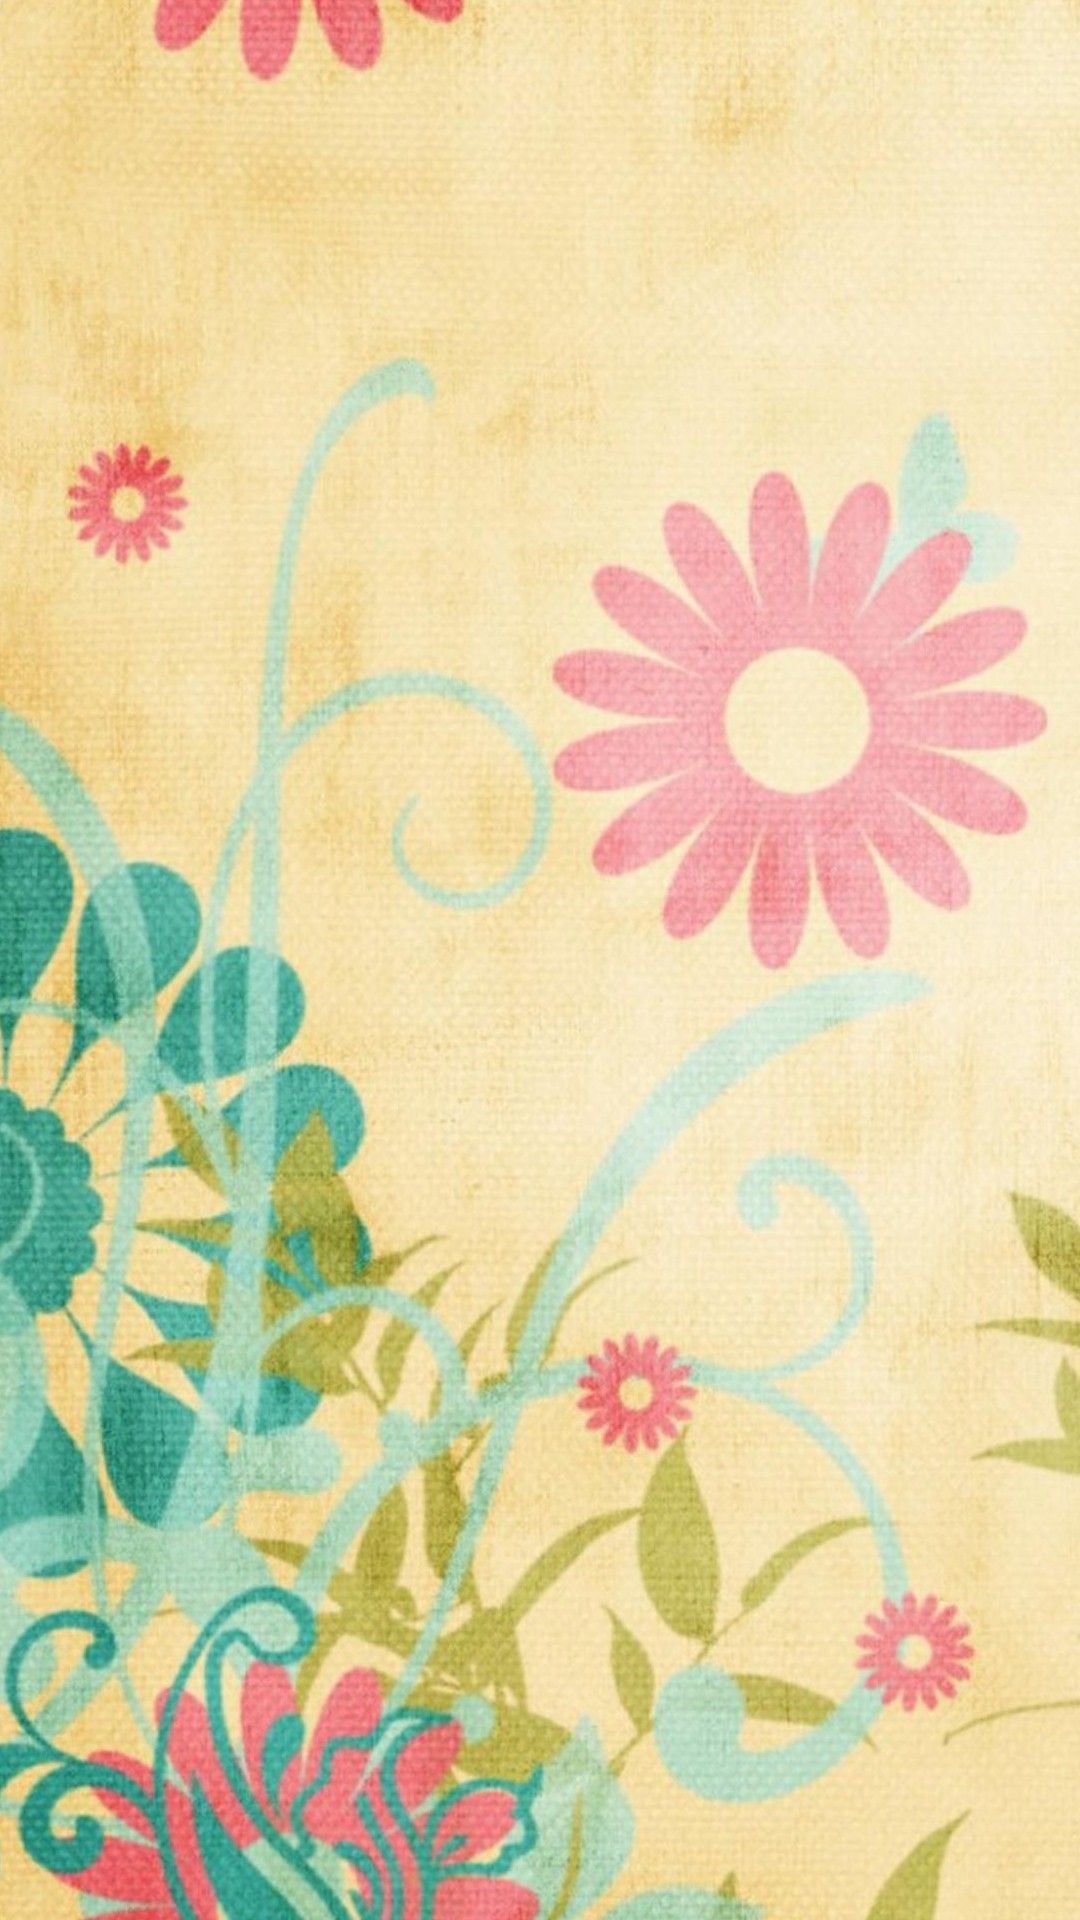 Phone Wallpaper Flower Design .teahub.io